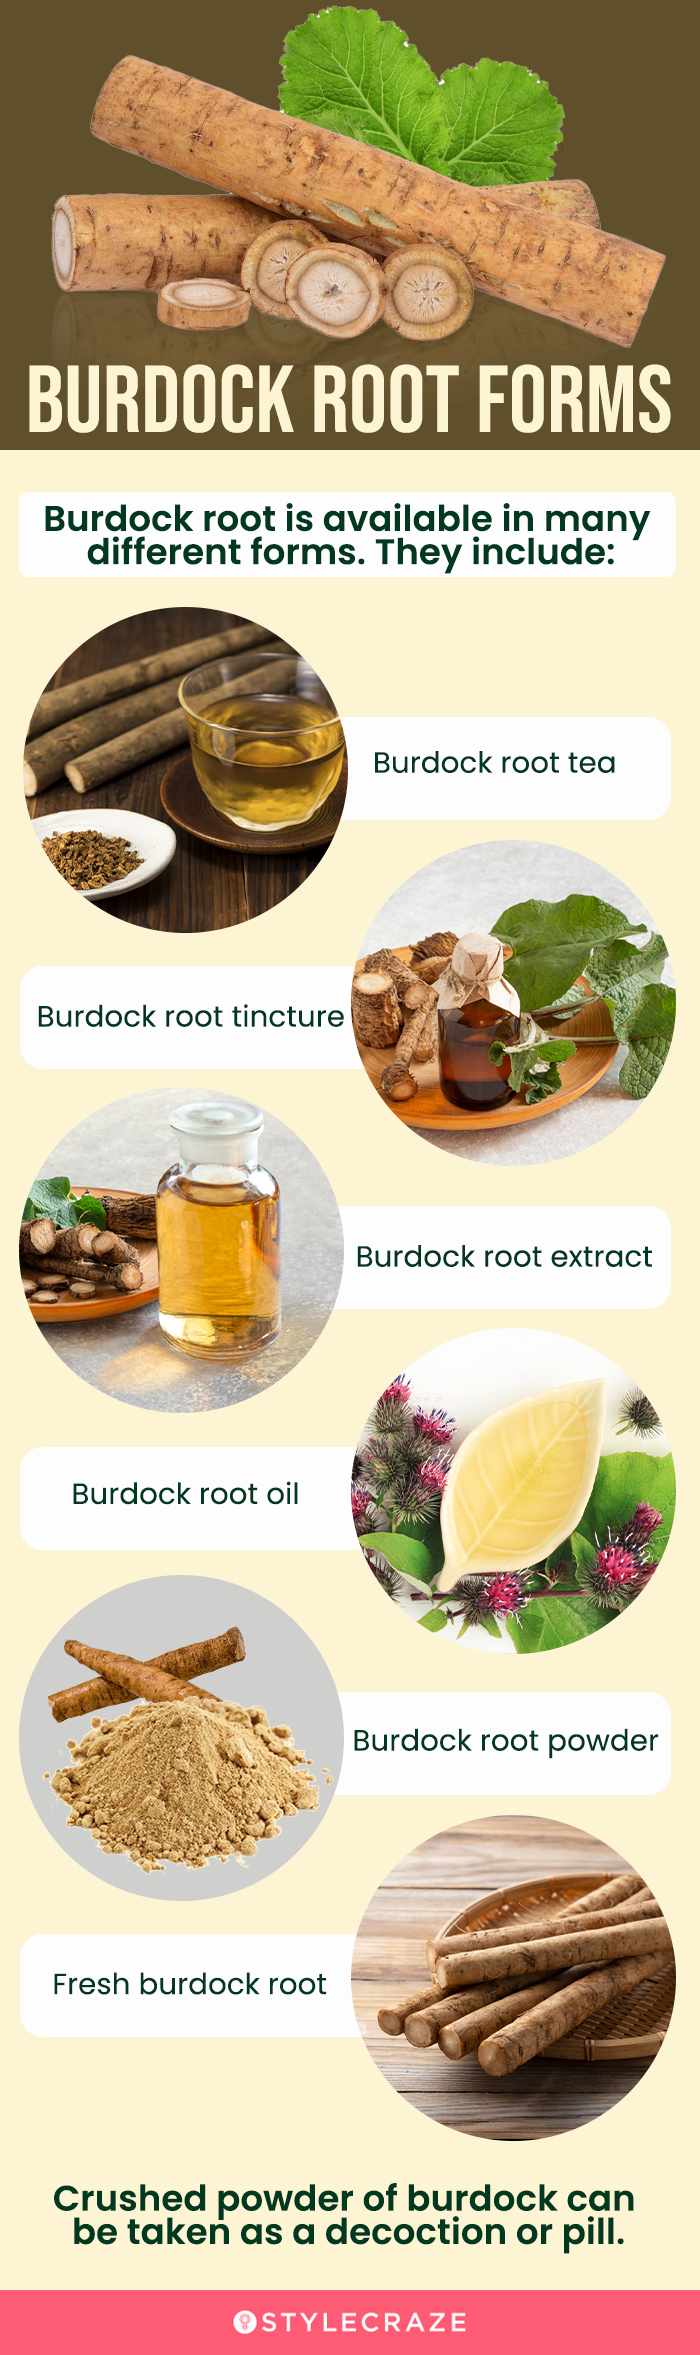 burdock root forms [infographic]